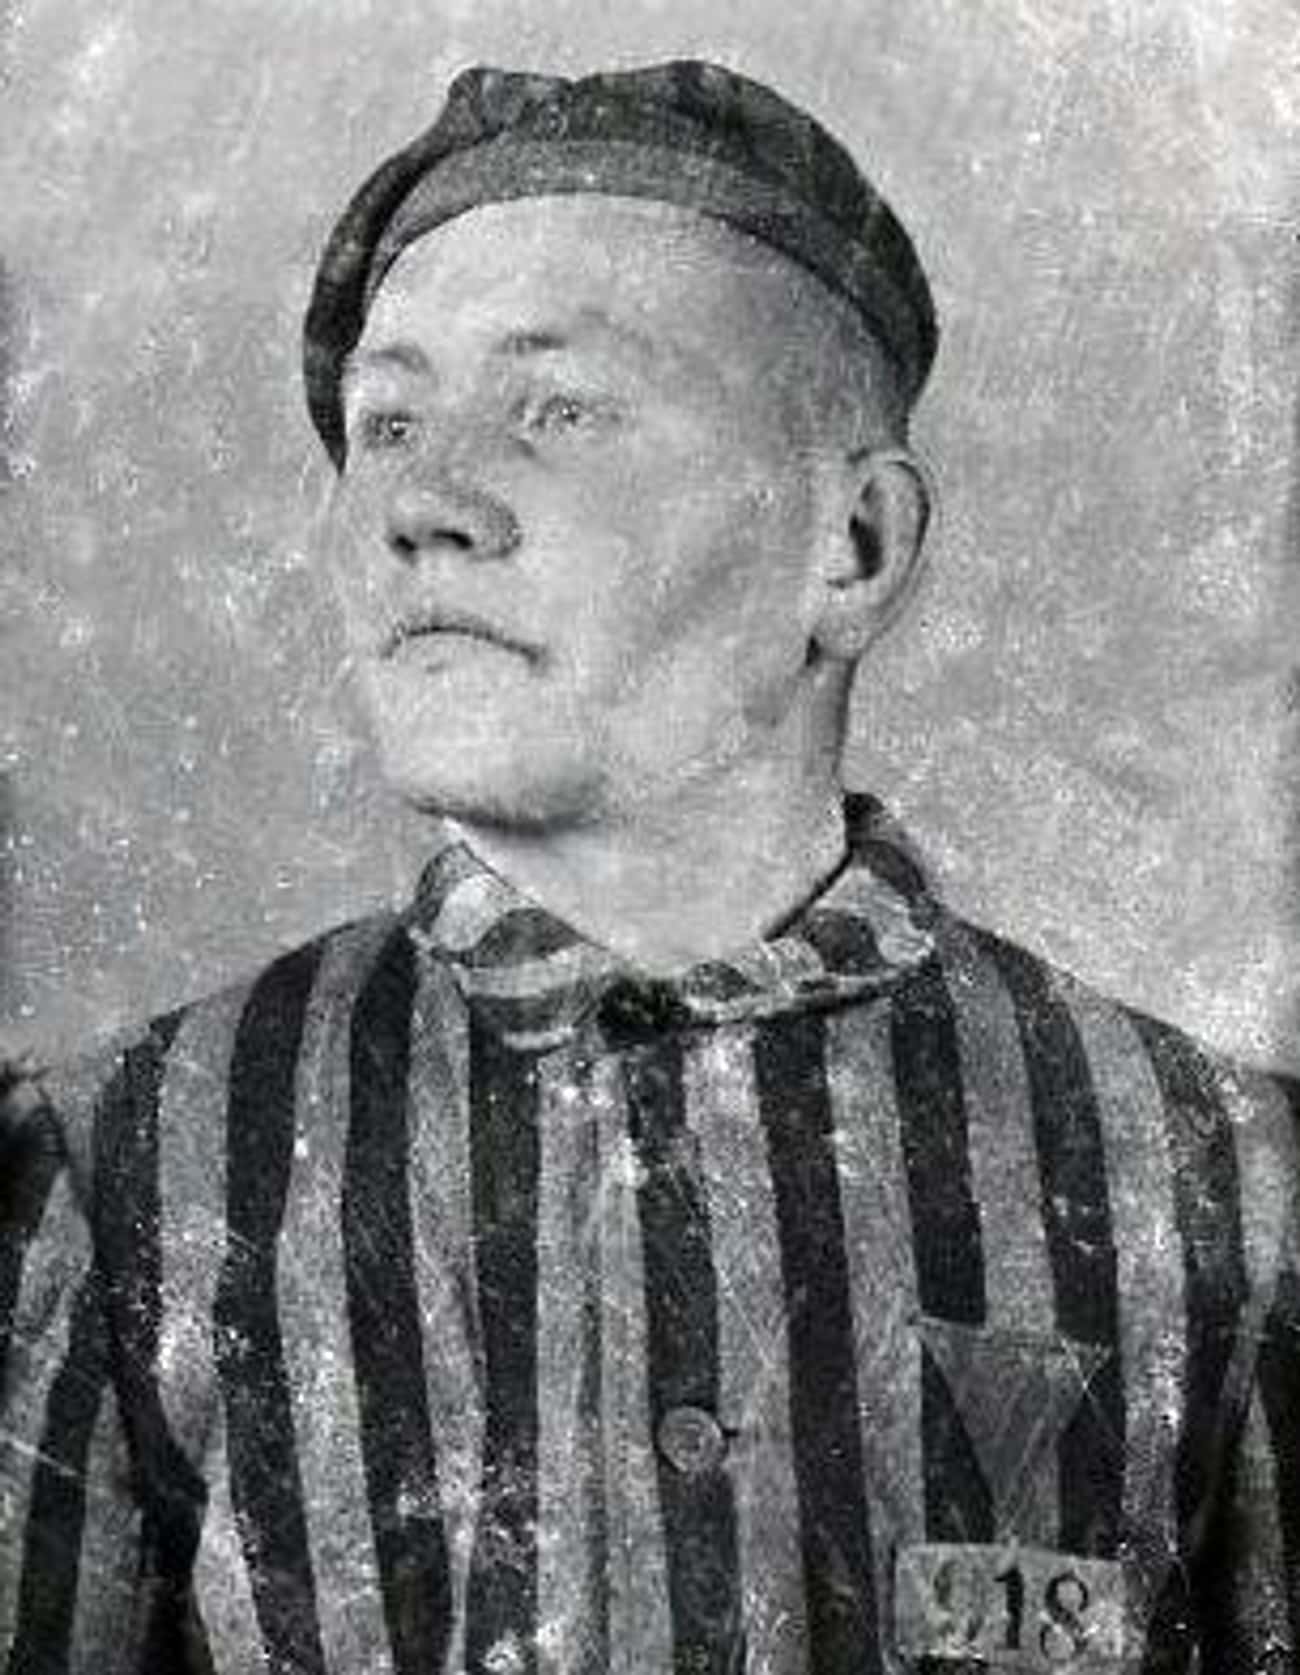 Kazimierz Piechowski Snuck Out Of Auschwitz By Taking A Car And An SS Uniform